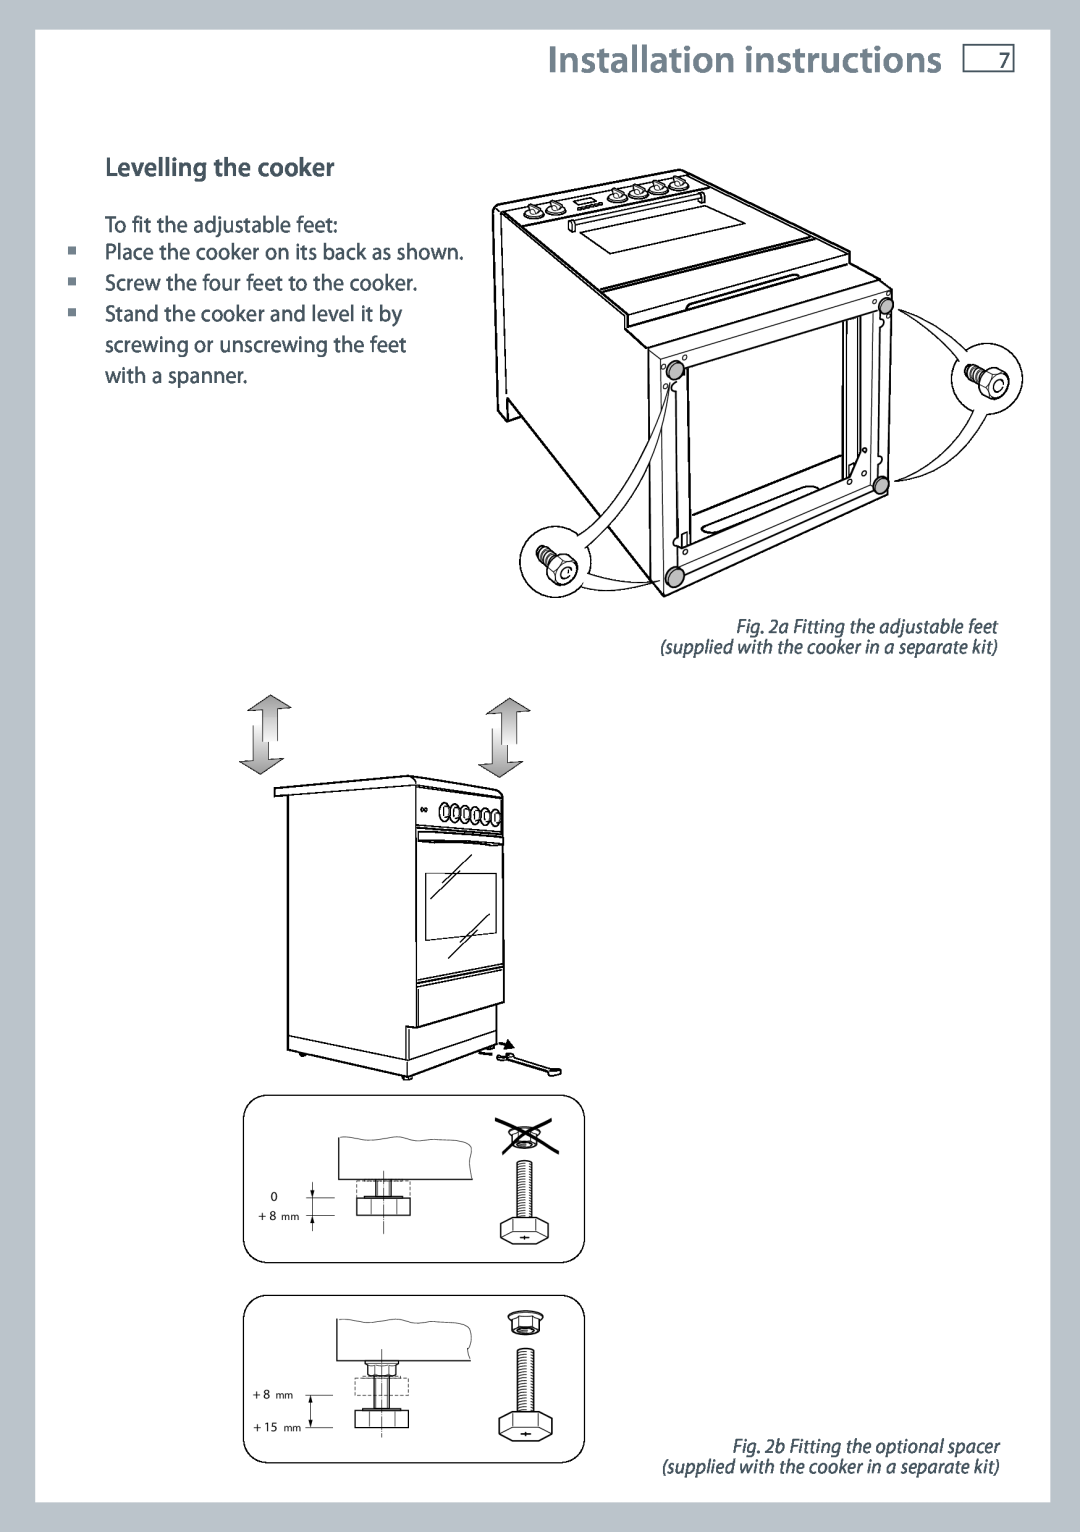 Fisher & Paykel 60 installation instructions Levelling the cooker, Installation instructions, To fit the adjustable feet 